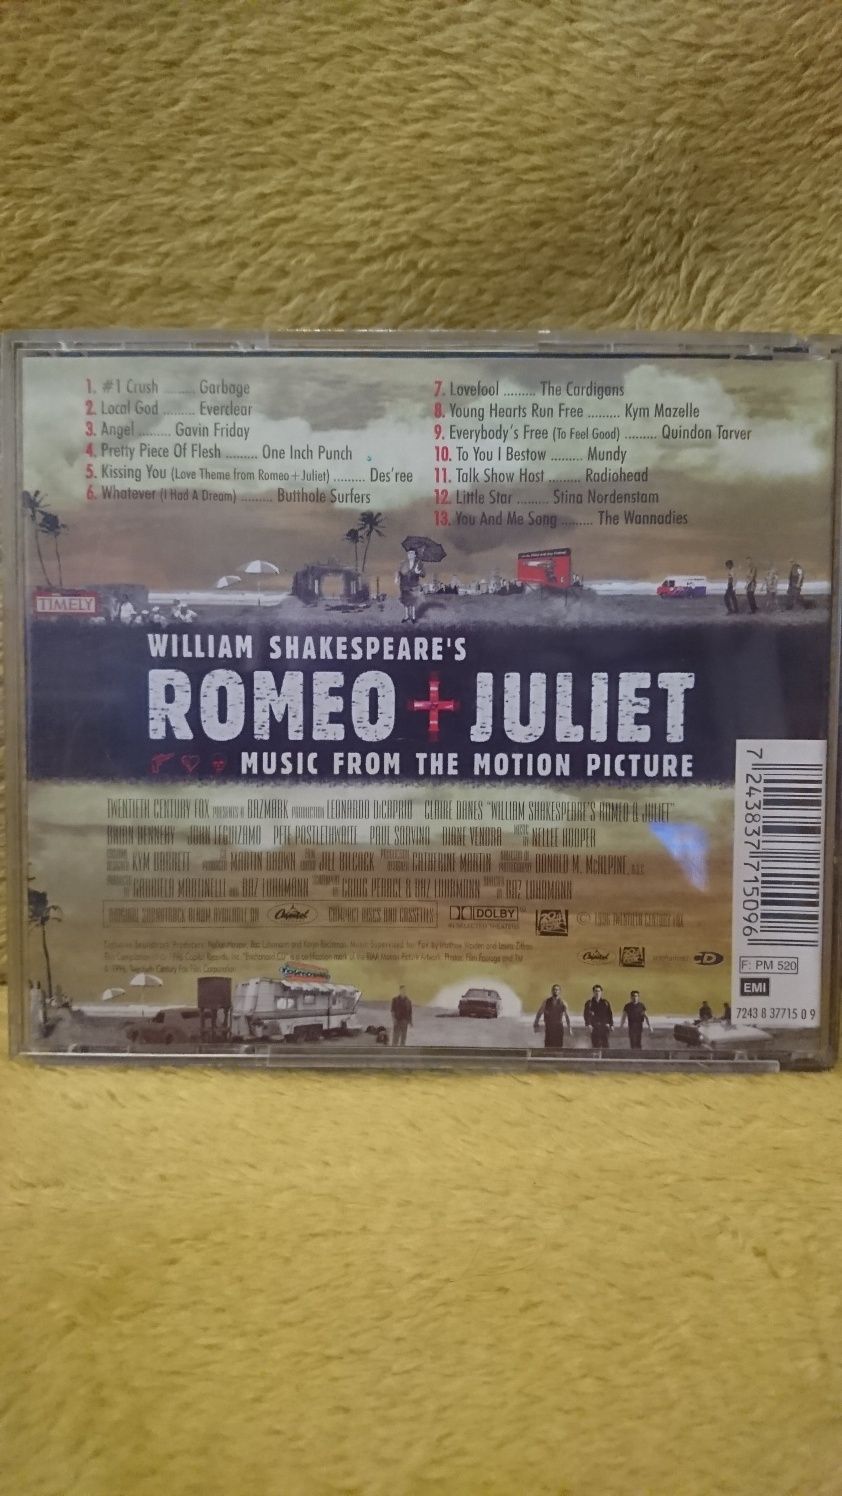 Romeo + Juliet - Soundtrack CD.